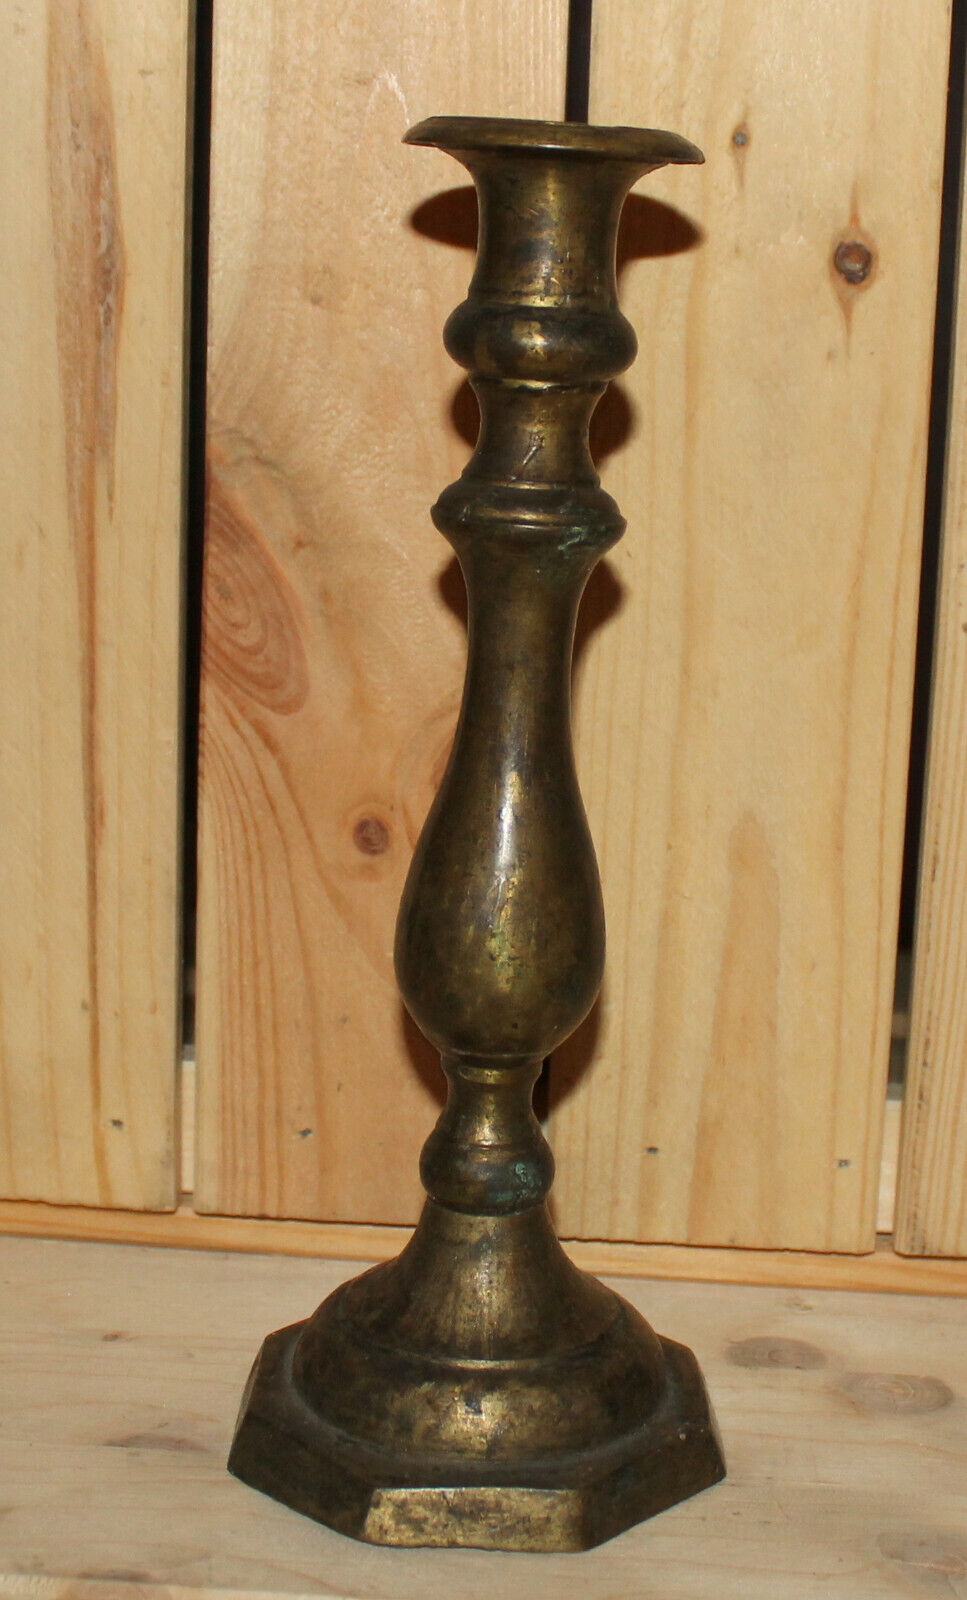 Antique Victorian bronze candlestick